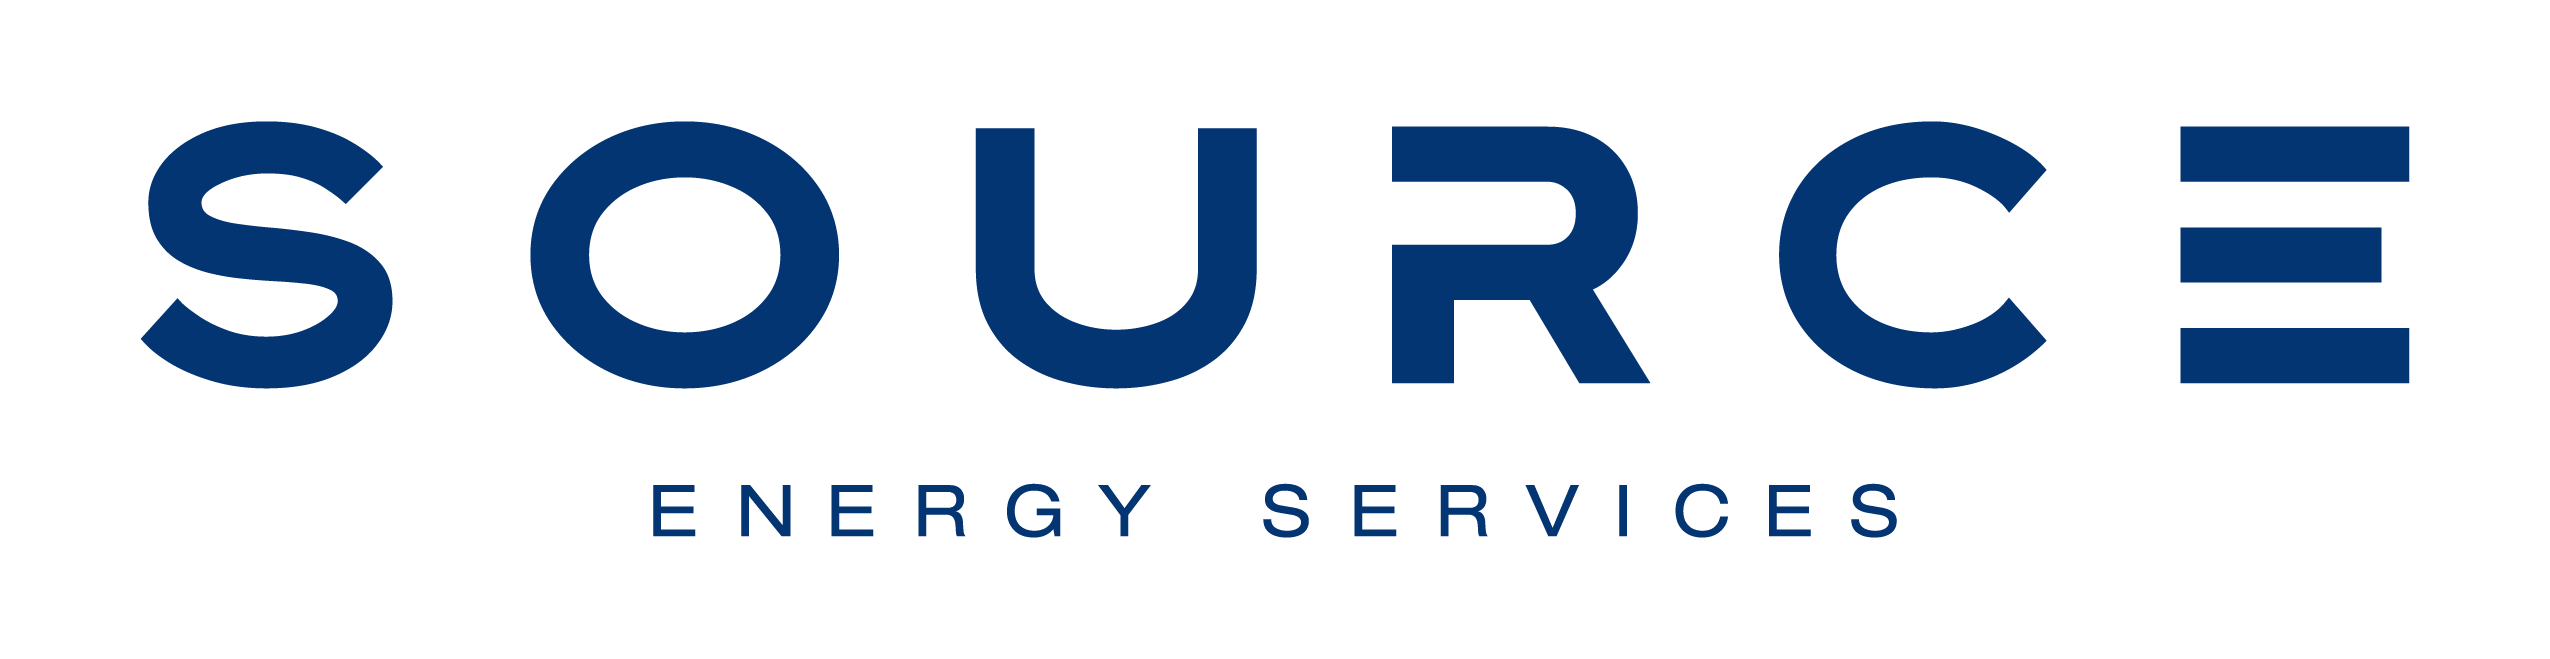 Source Energy Services logo